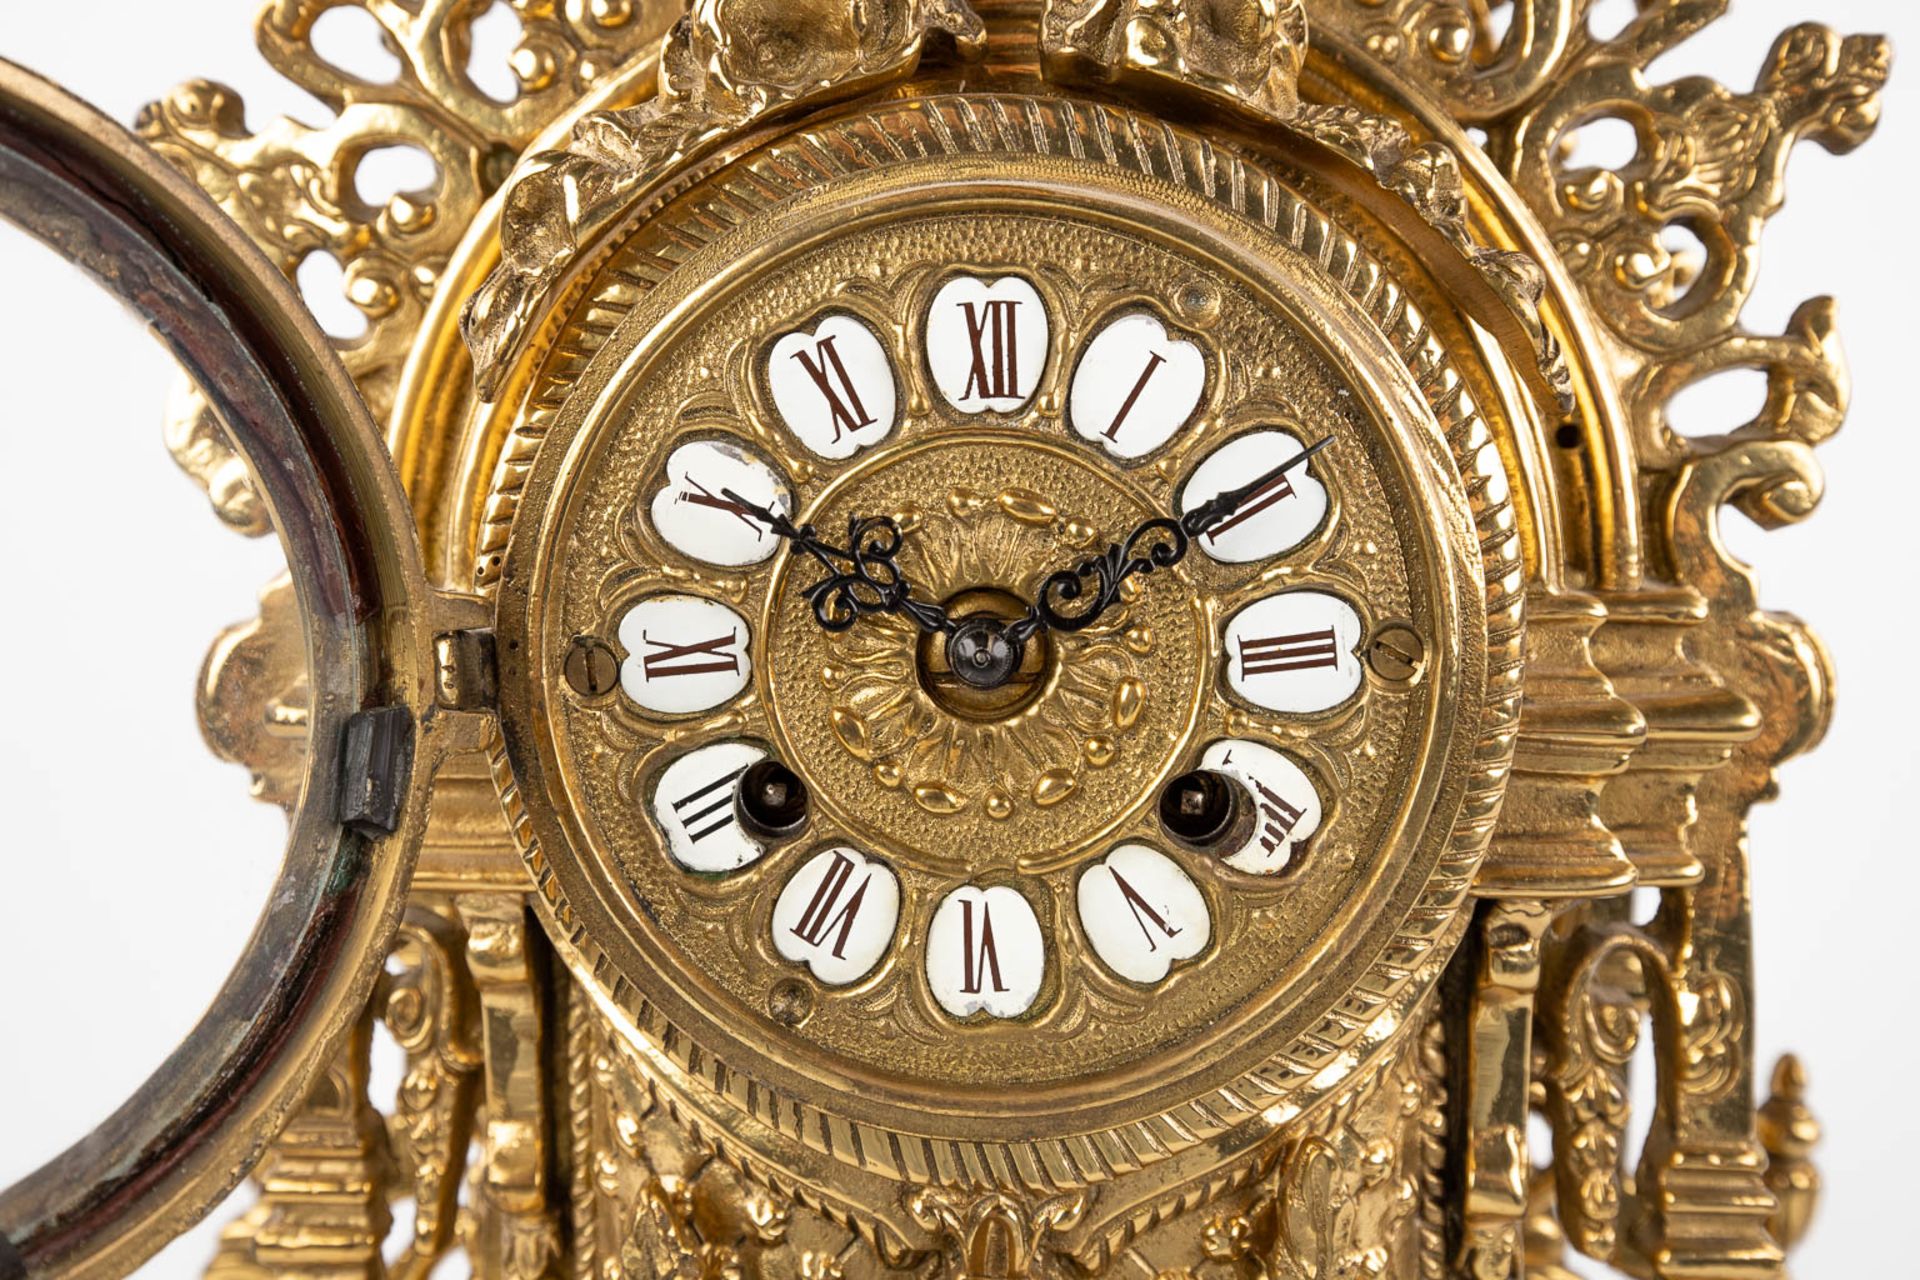 A three-piece mantle garniture clock and candelabra, bronze. 20th C. (D:16 x W:35 x H:62 cm) - Image 14 of 16